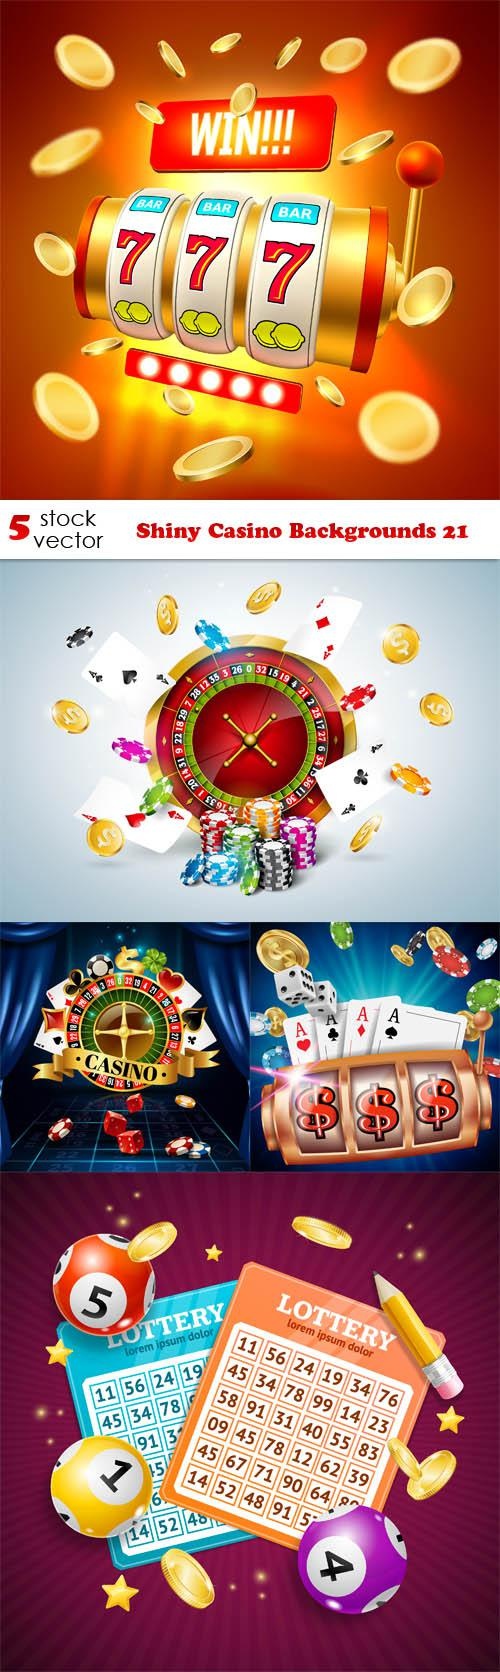 Shiny Casino Backgrounds 21 ((aitff (11 files)